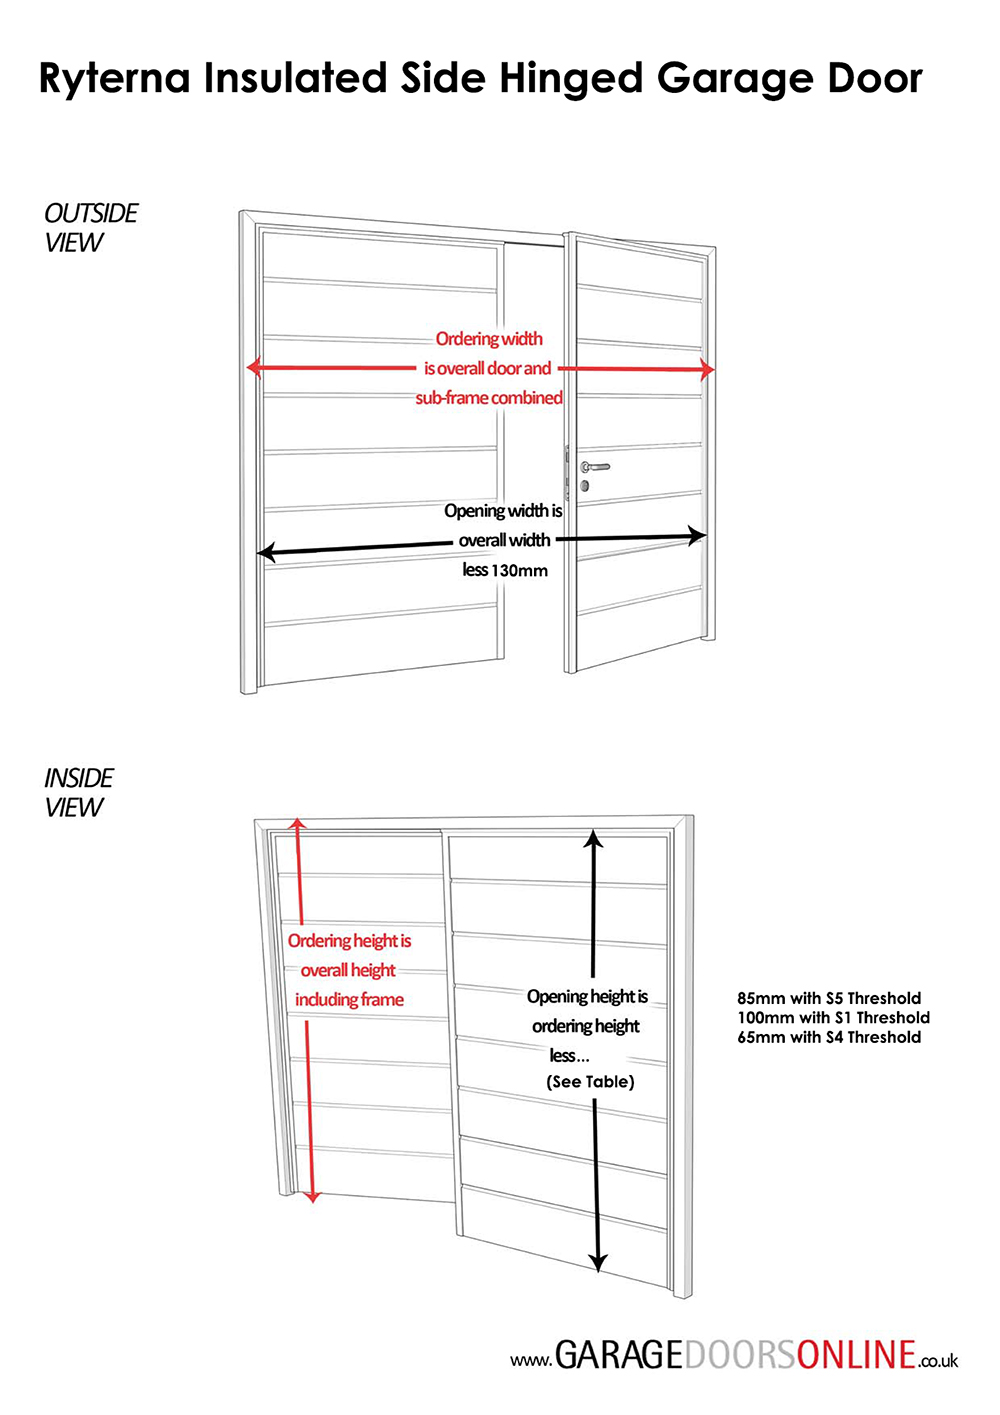 Ryterna Insulated Side Hinged Garage Door Measuring Guide Dimensions